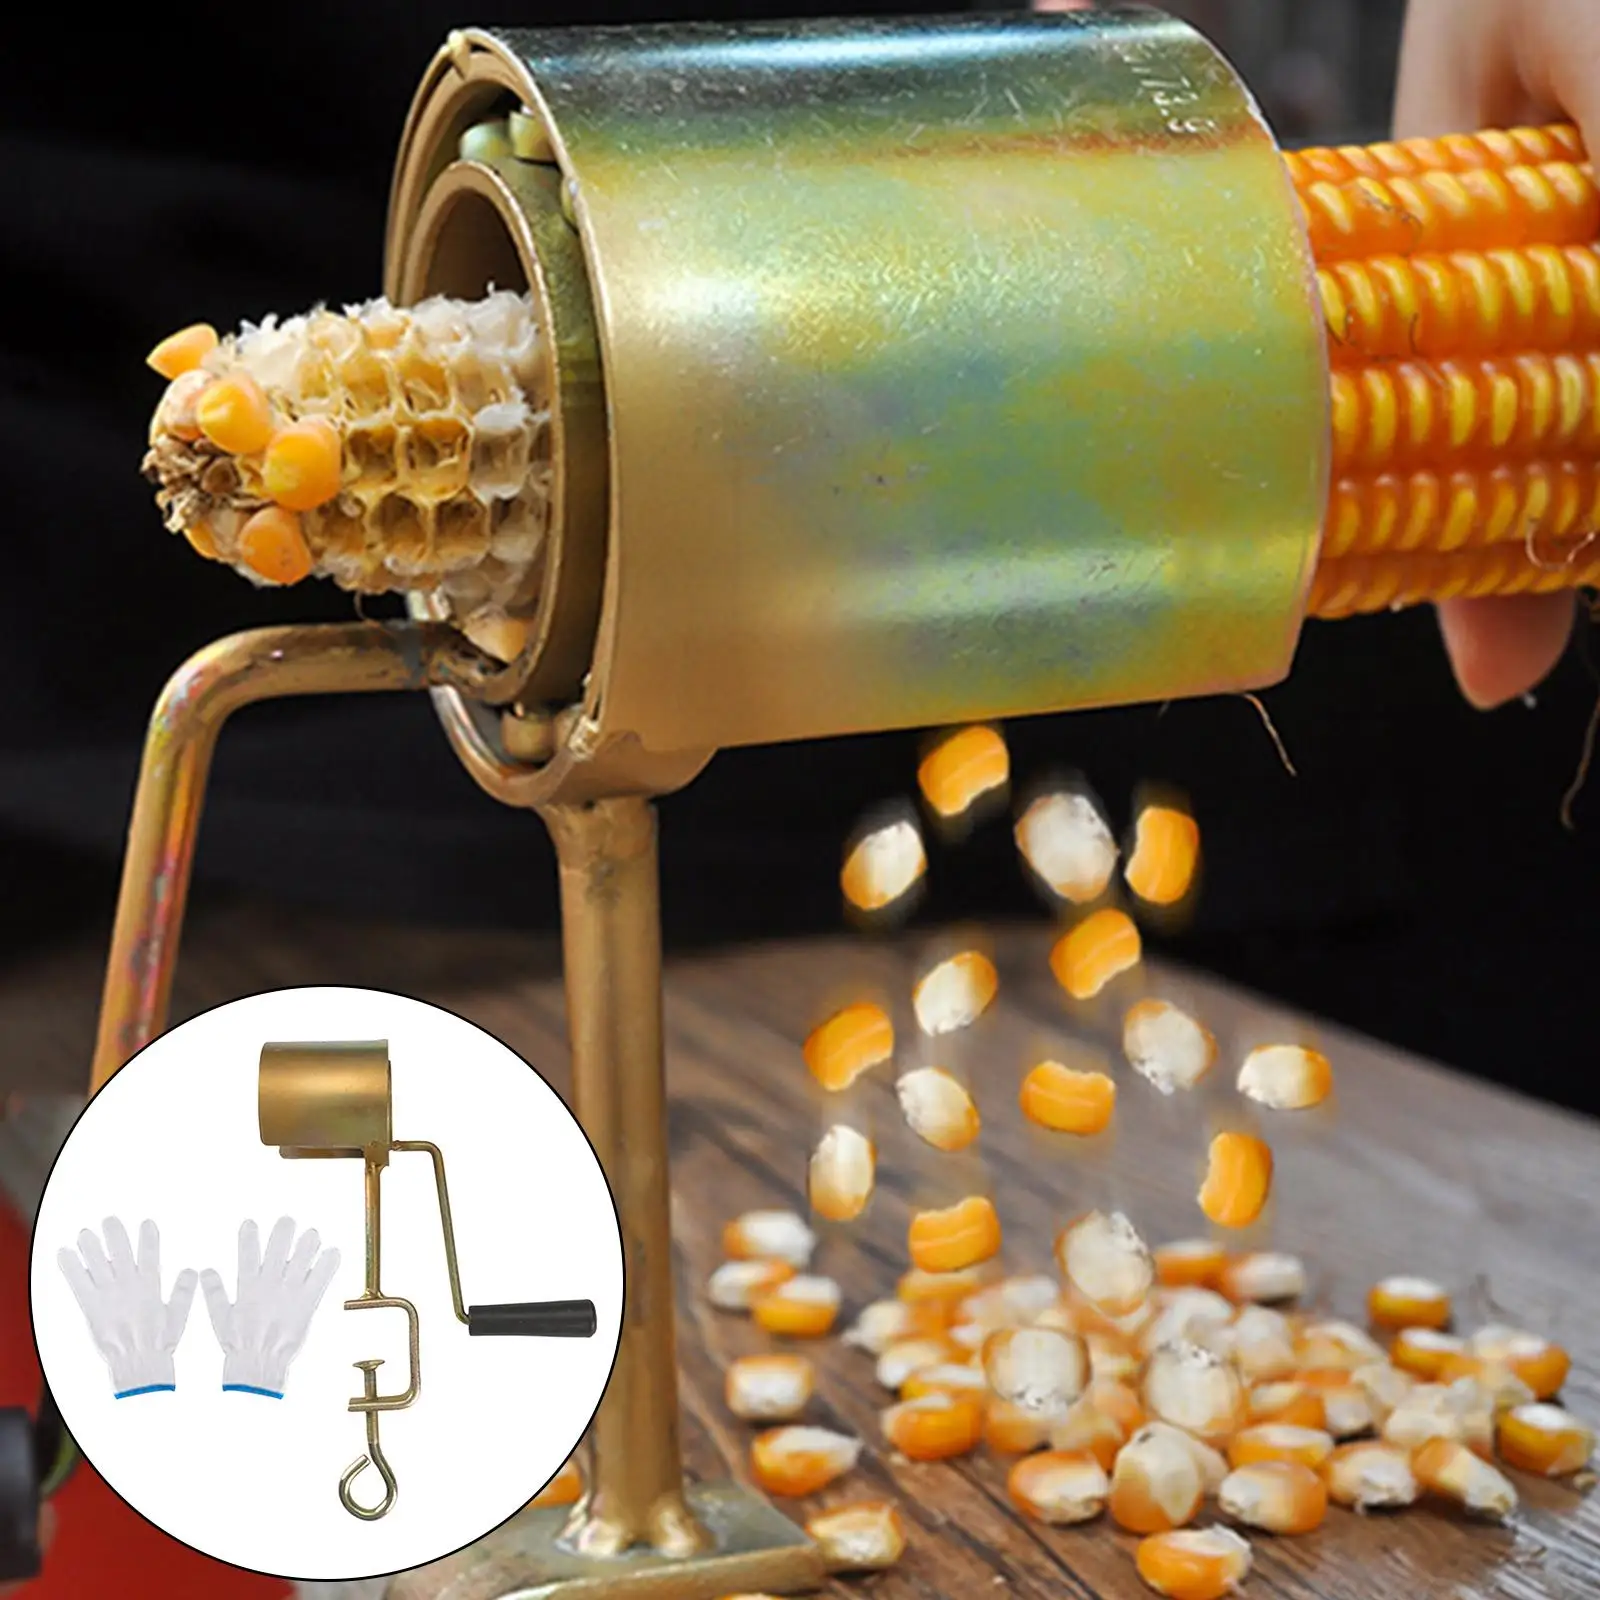 Professional Manual Corn Thresher Home Corn Peeling Tool Corn Stripper Tool